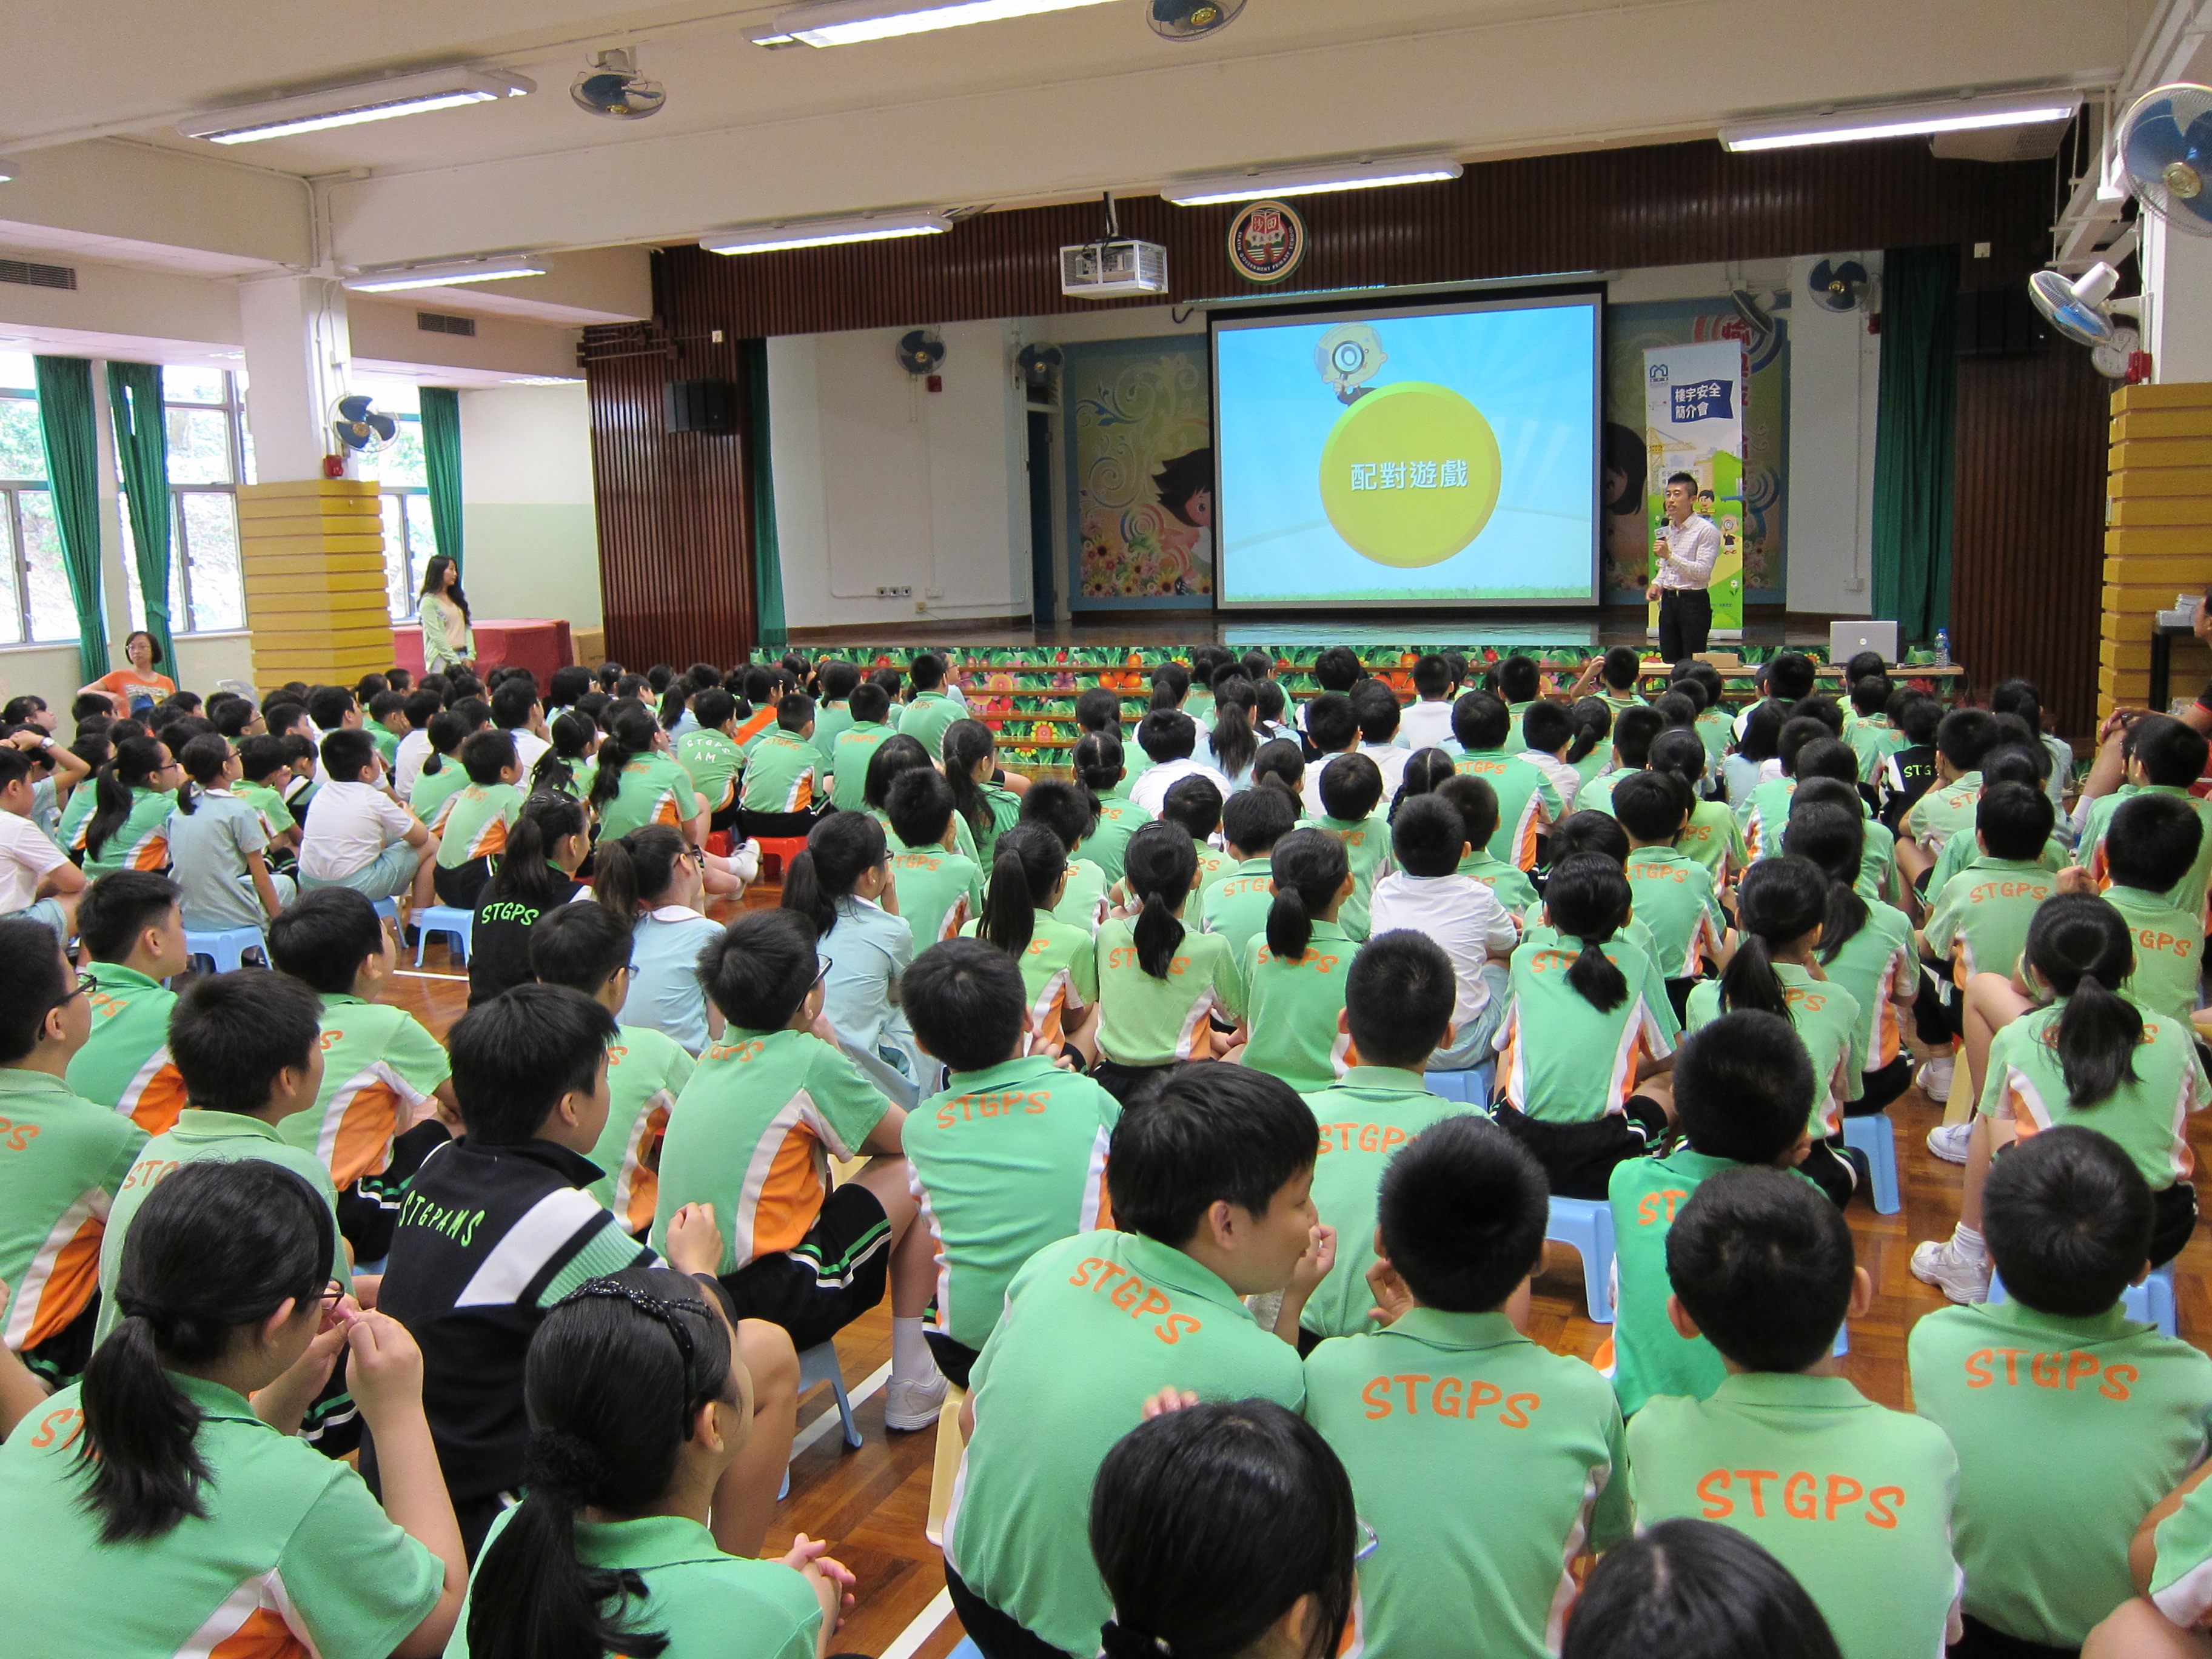 Sha Tin Government Primary School